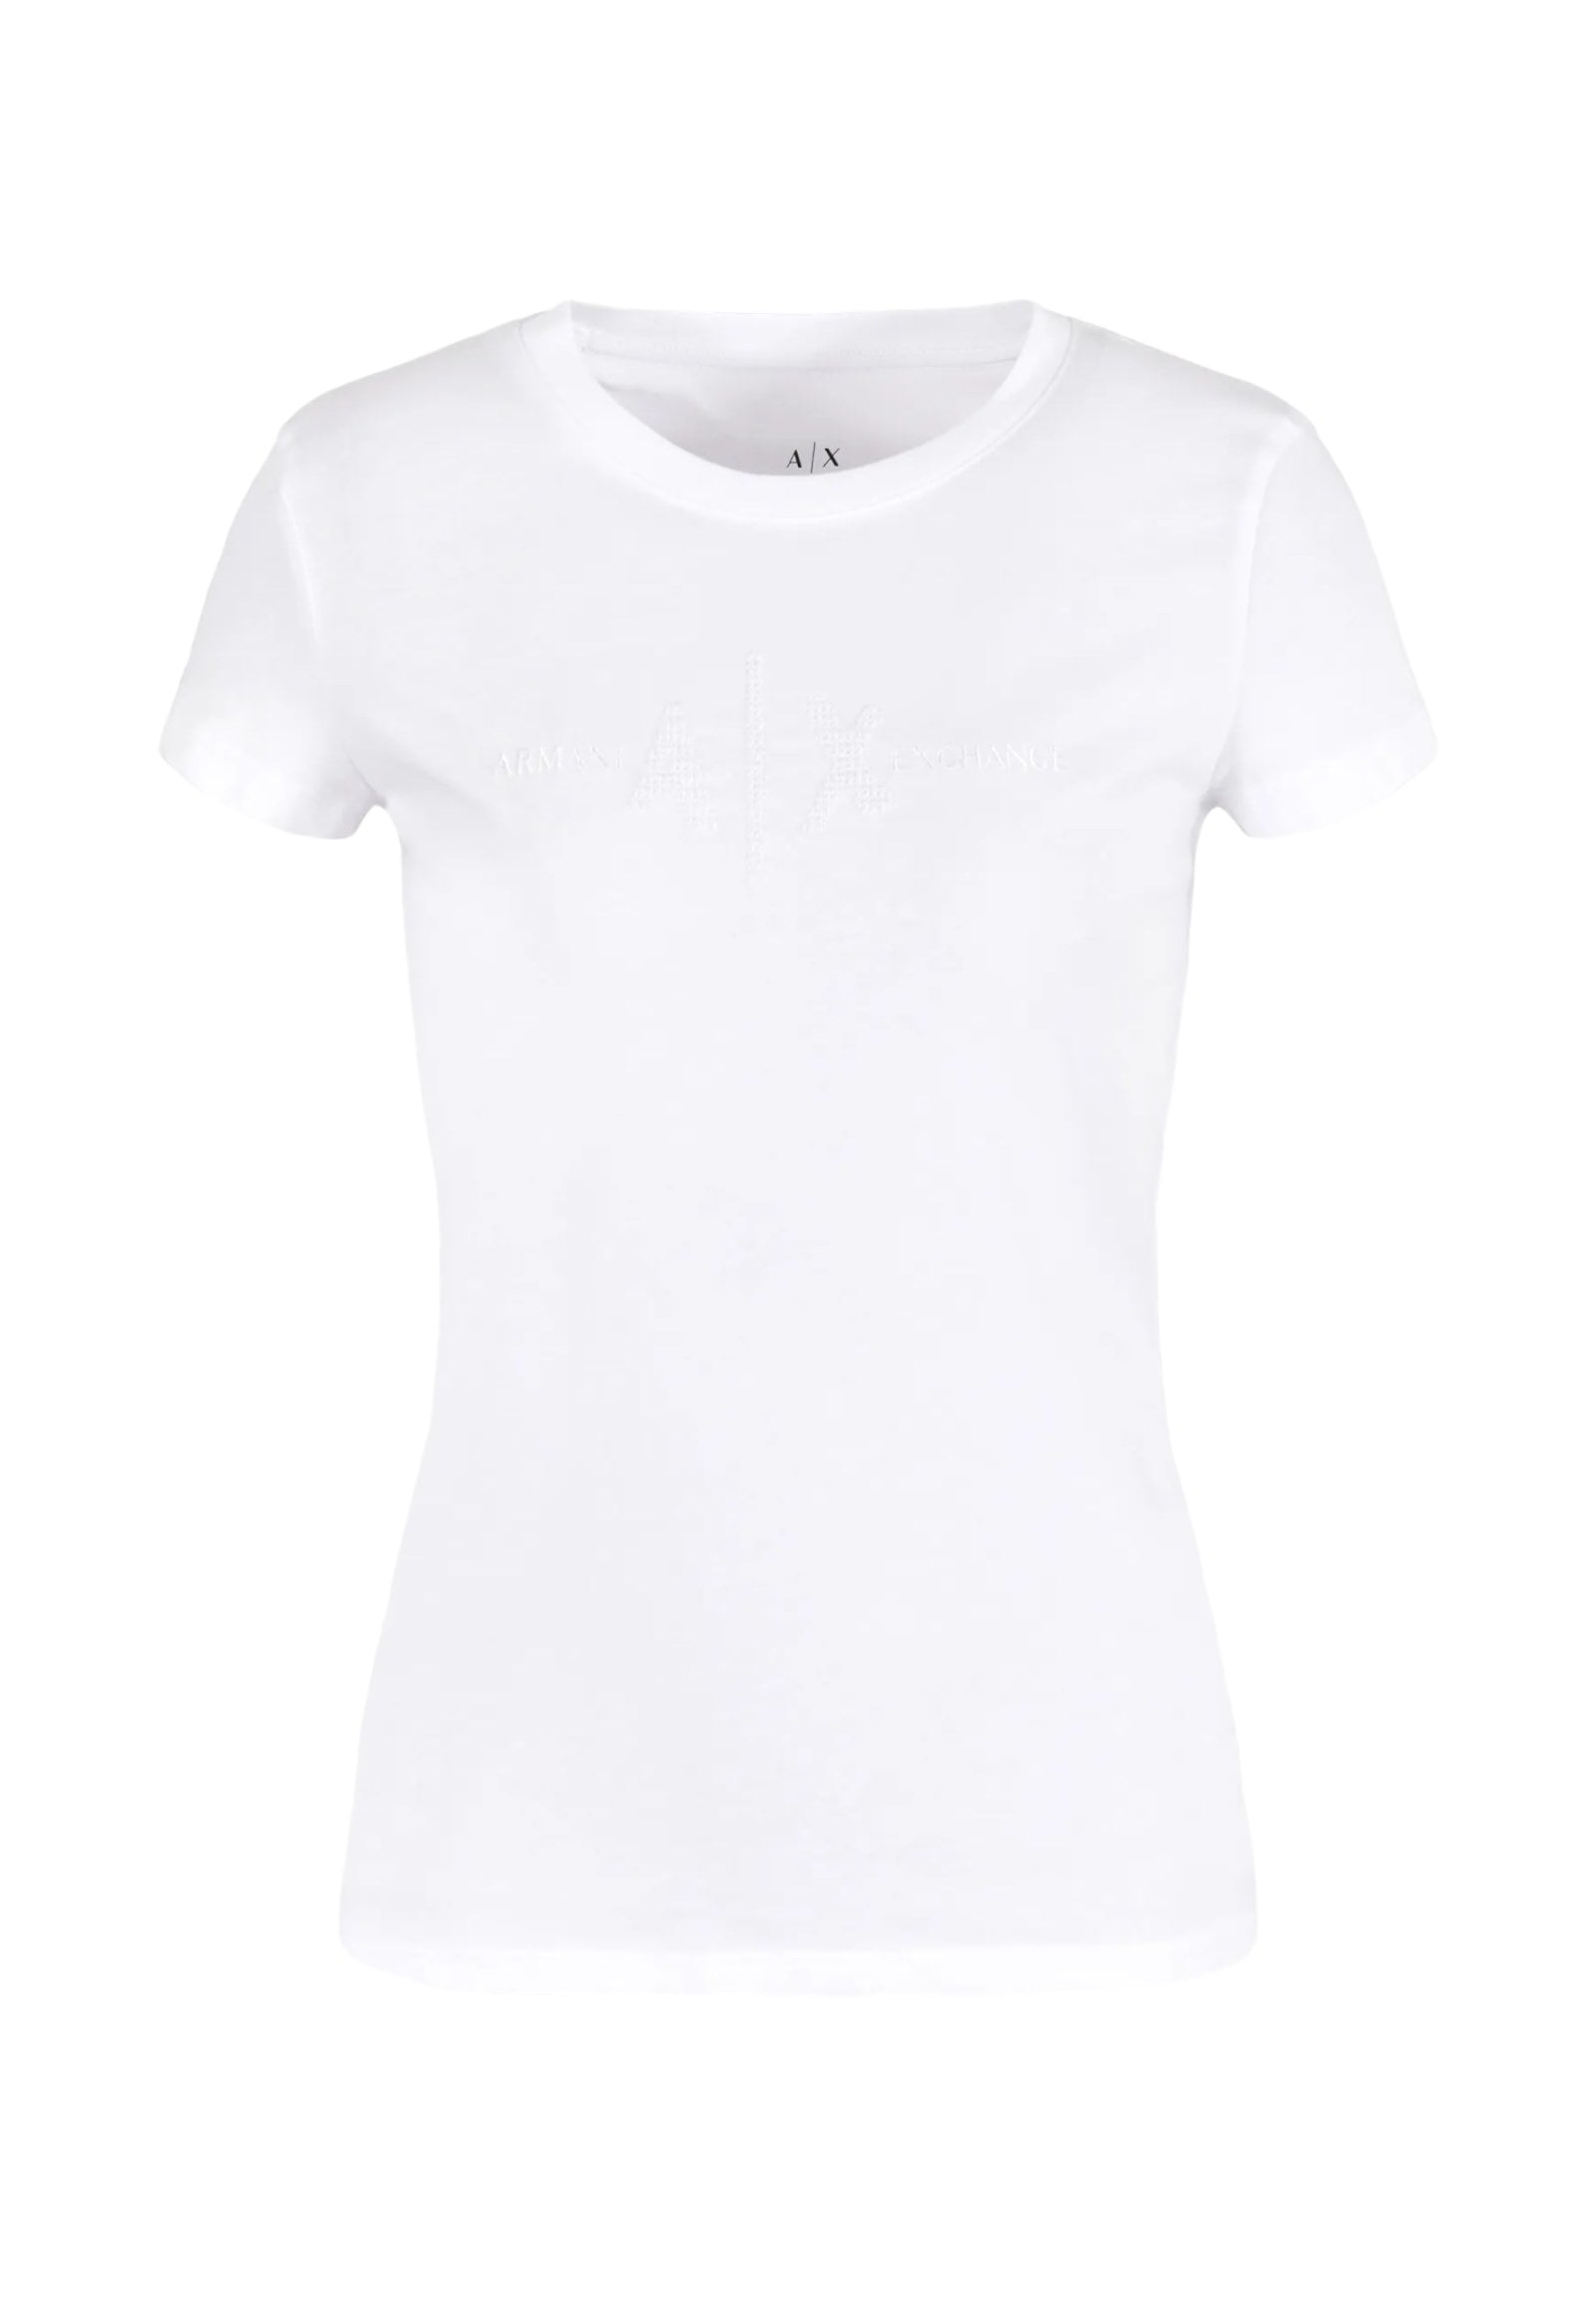 3dyt58 Optic White T-Shirt